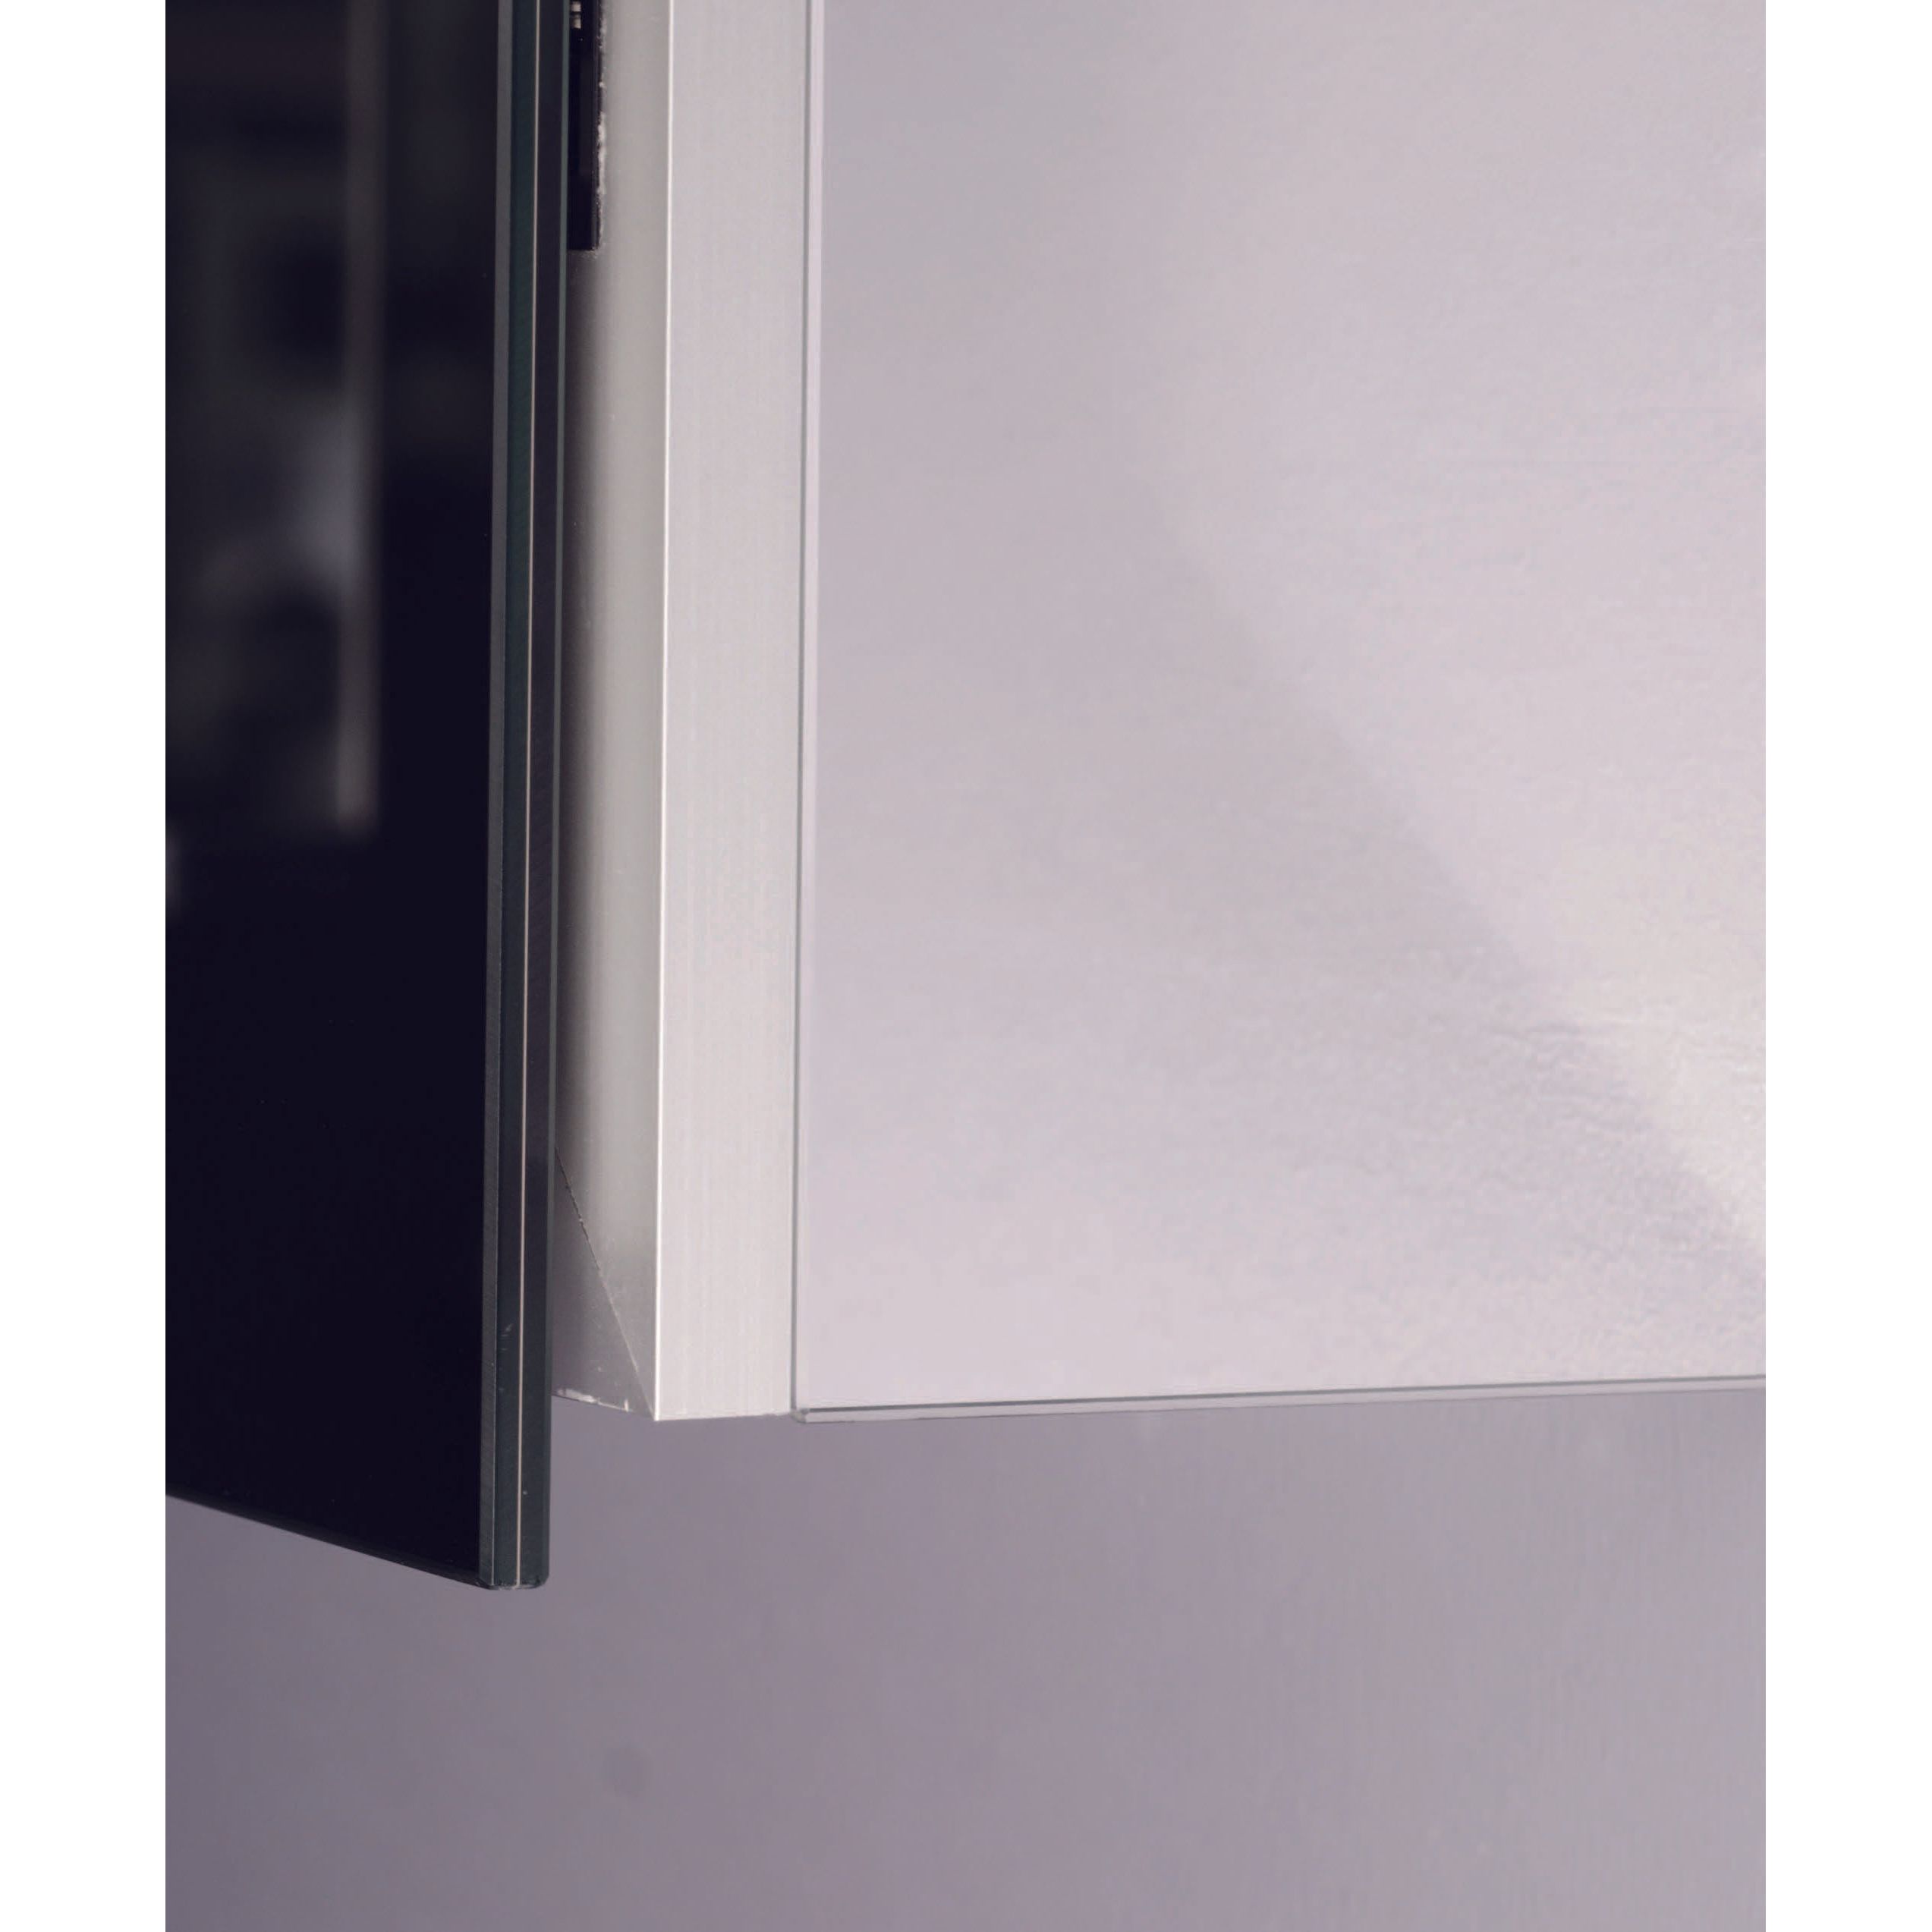 Sidler - 1.499.999 - DIAMANDO™ Wall mount kit DM/LED including side mirrors - DIAMANDOTM LED - Mirror